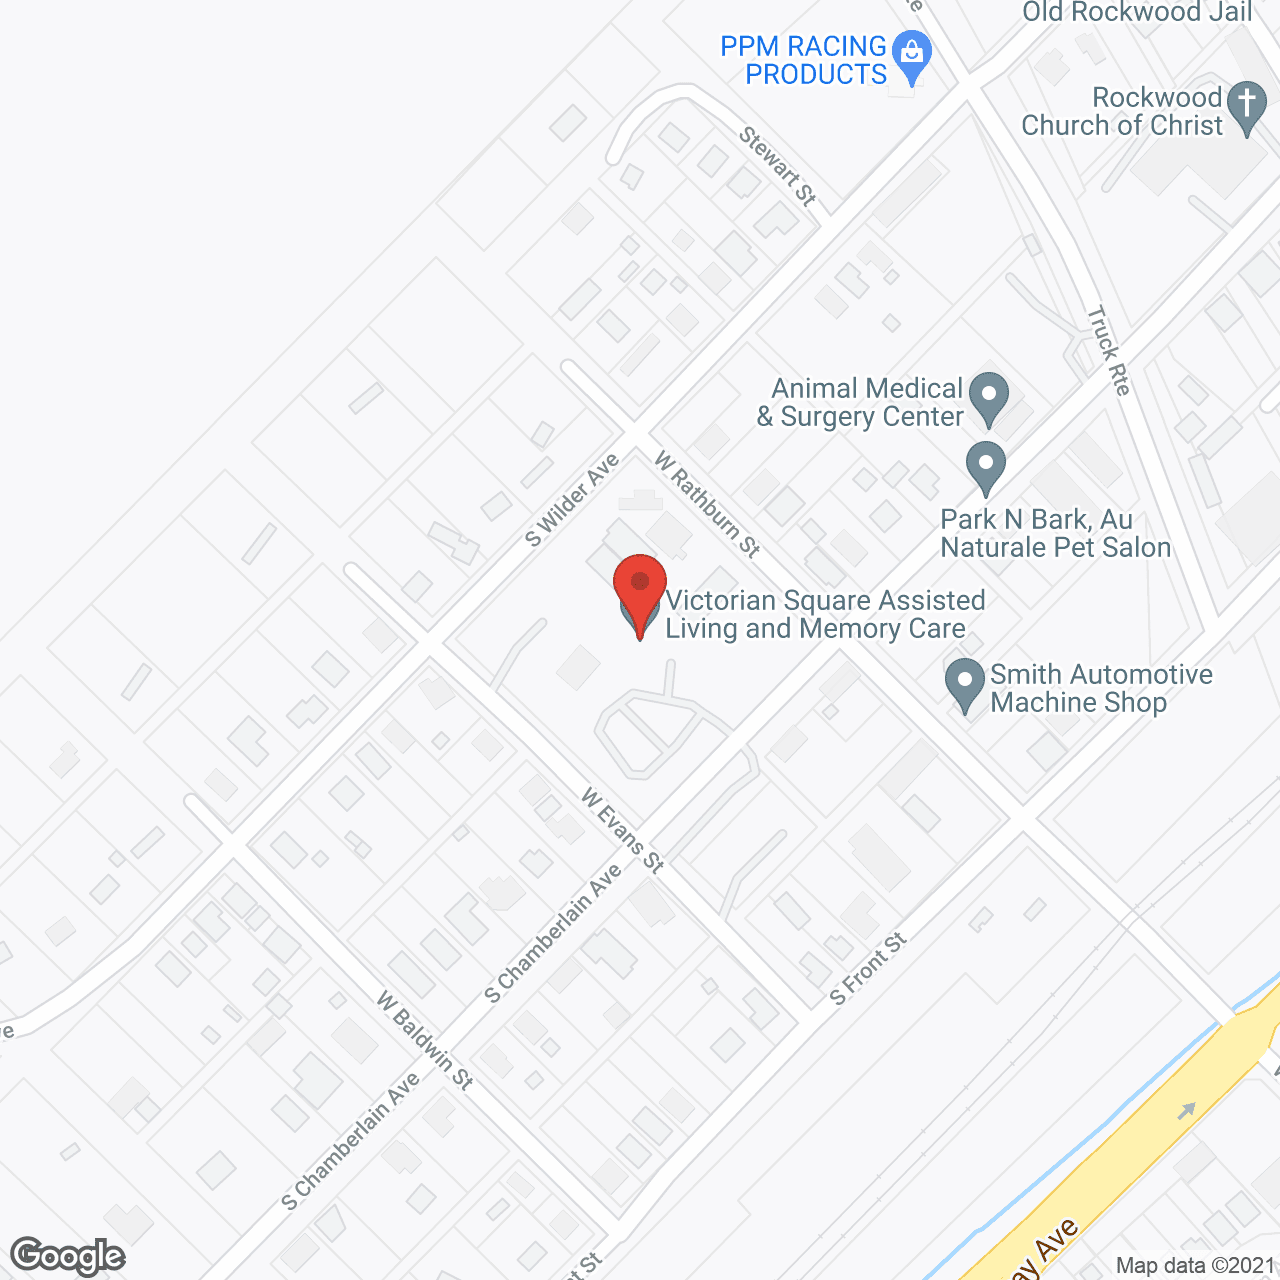 Victorian Square in google map